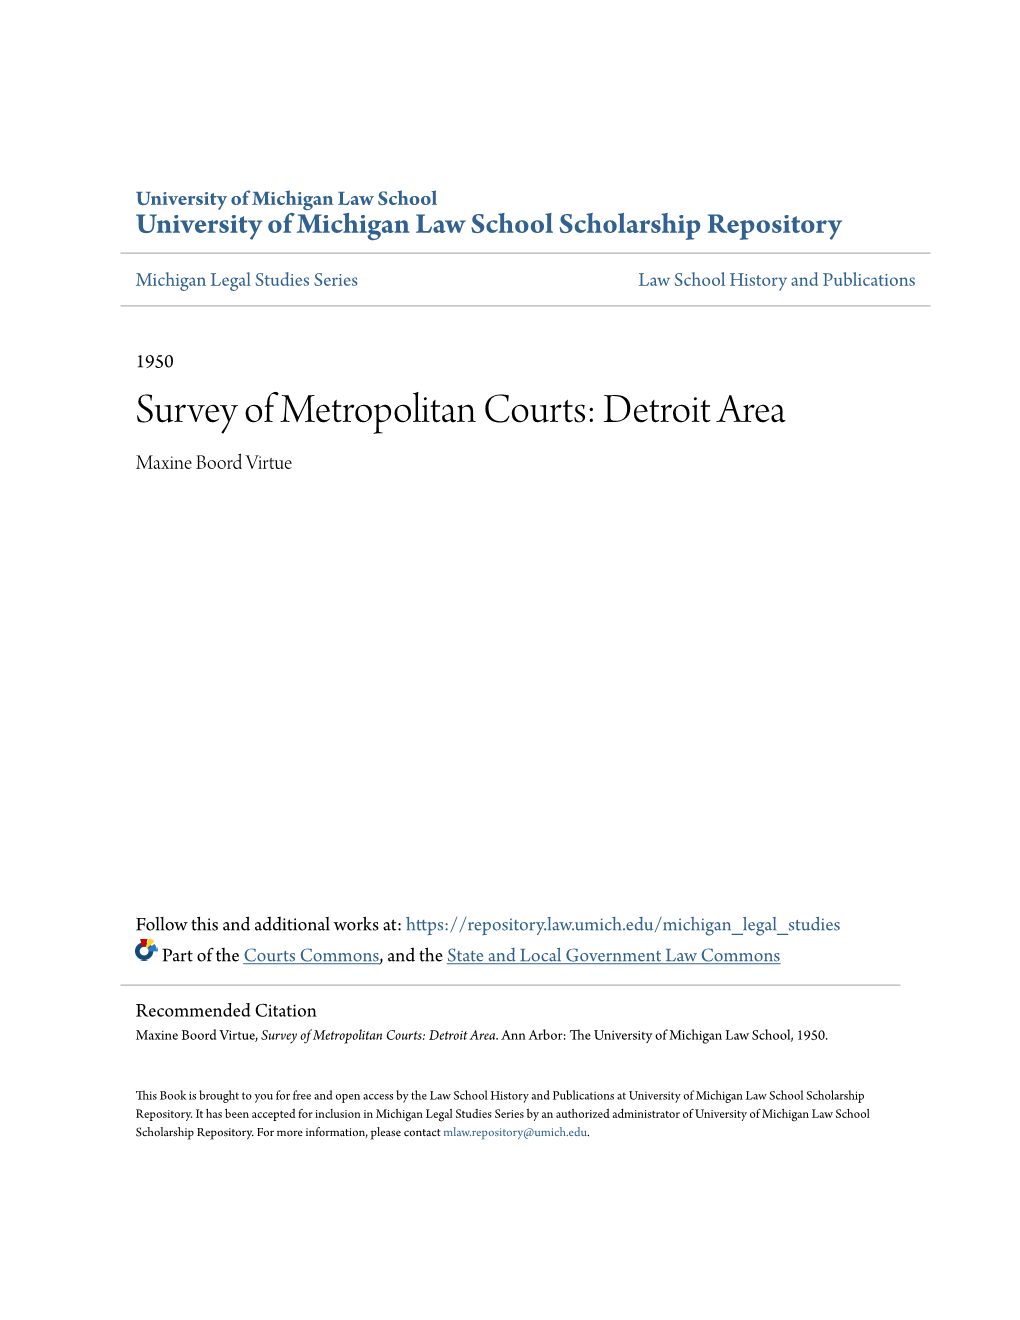 Survey of Metropolitan Courts: Detroit Area Maxine Boord Virtue